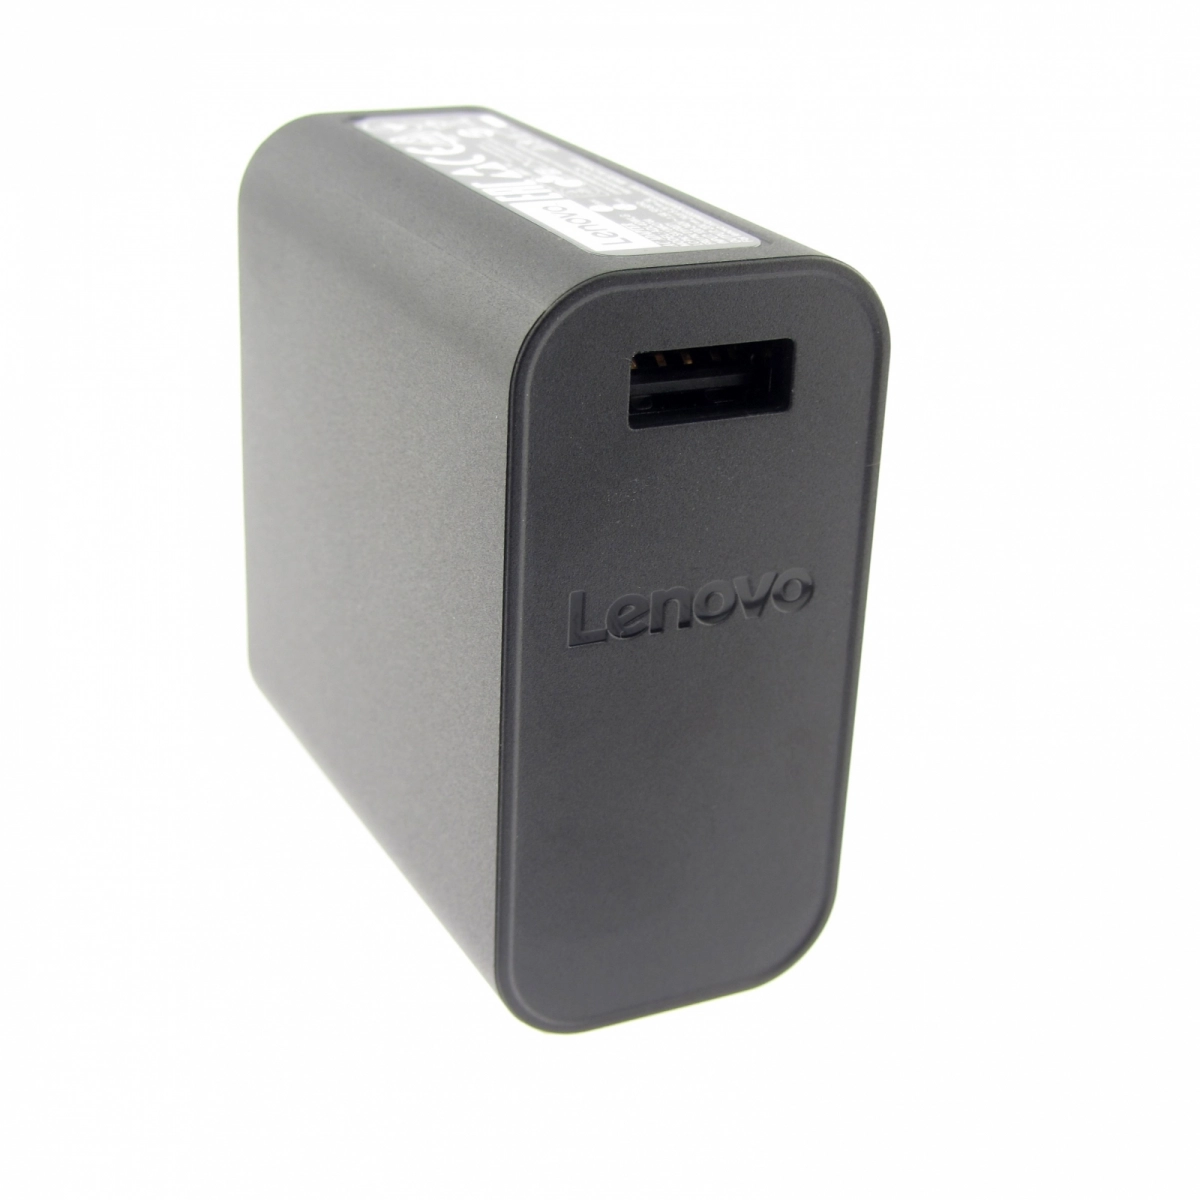 Original Netzteil für LENOVO ADL40WDJ 36200562 36200563, 20V, 2A Stecker USB, ohne USB-Kabel